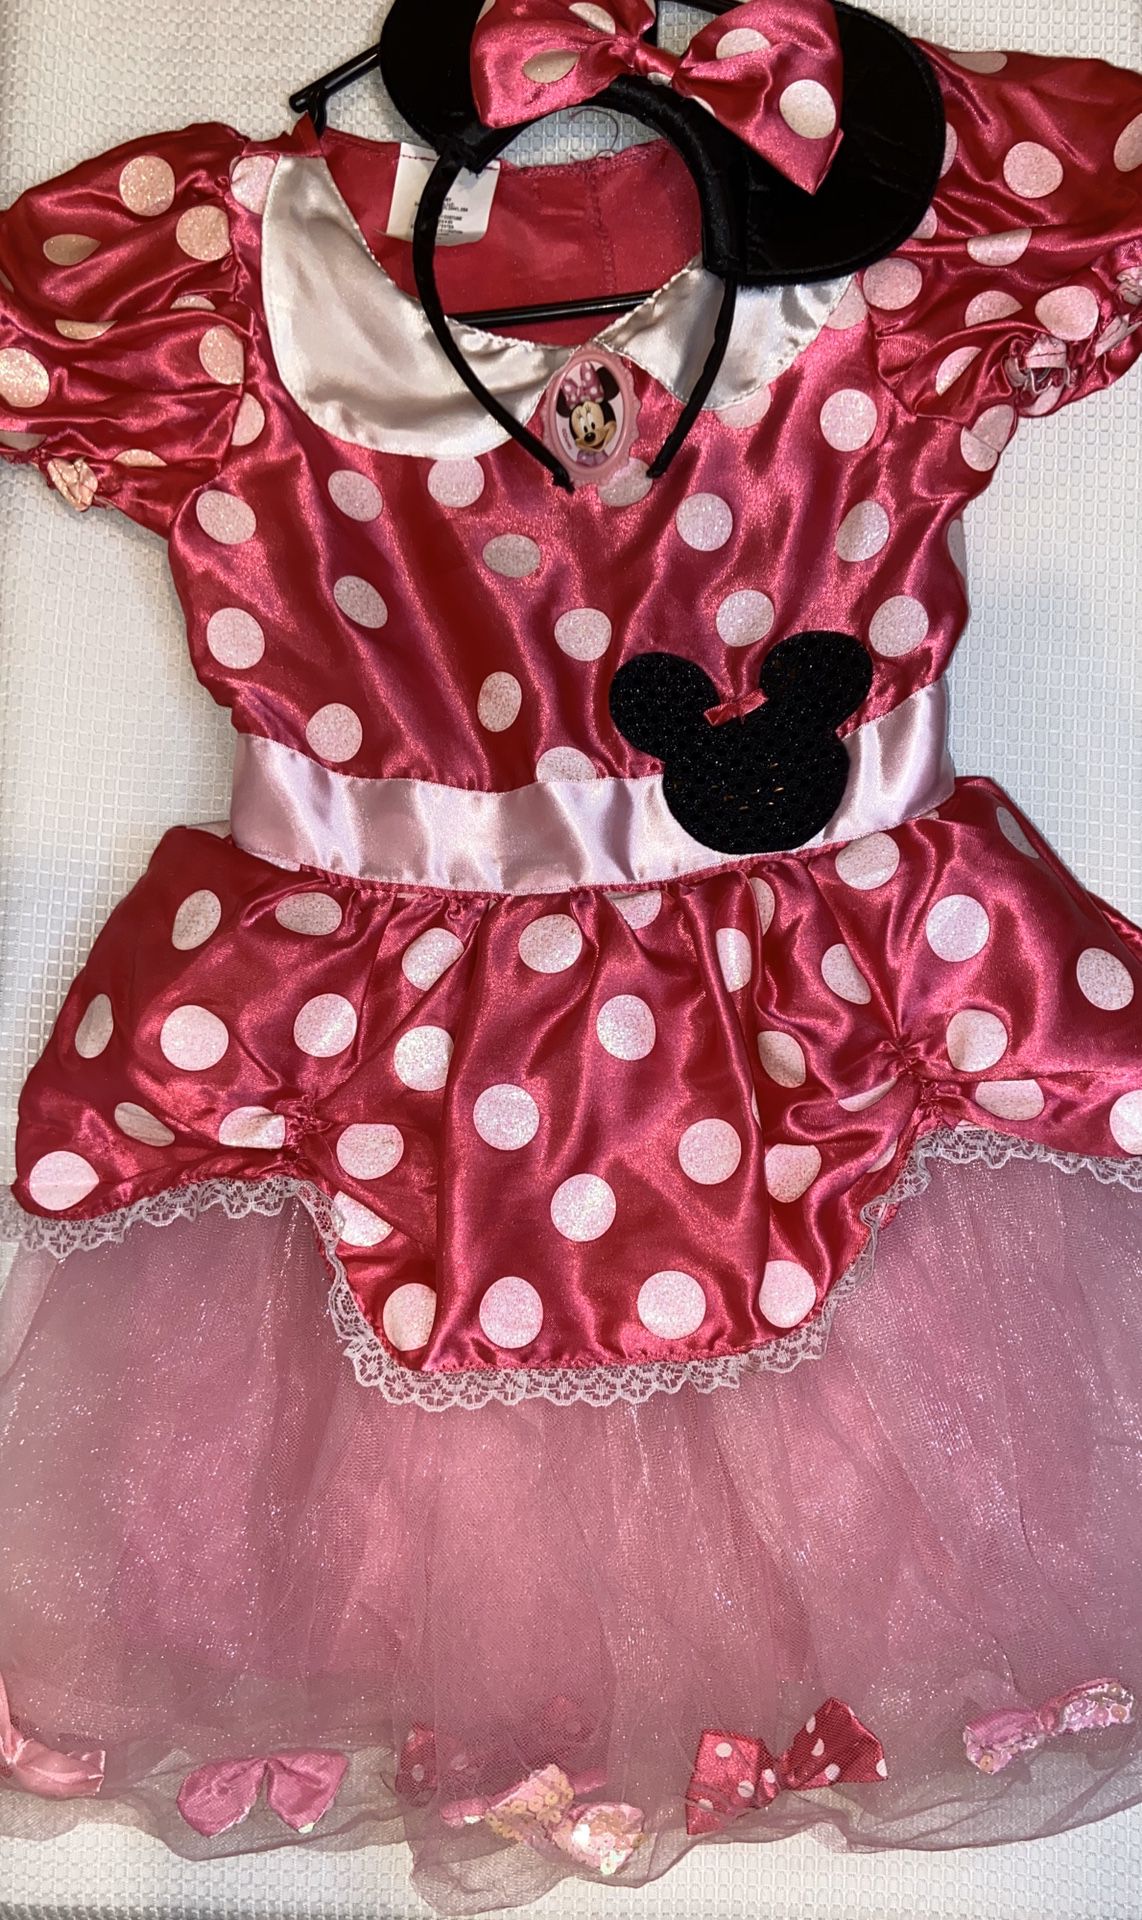 Disney Minnie mouse dress halloween costume